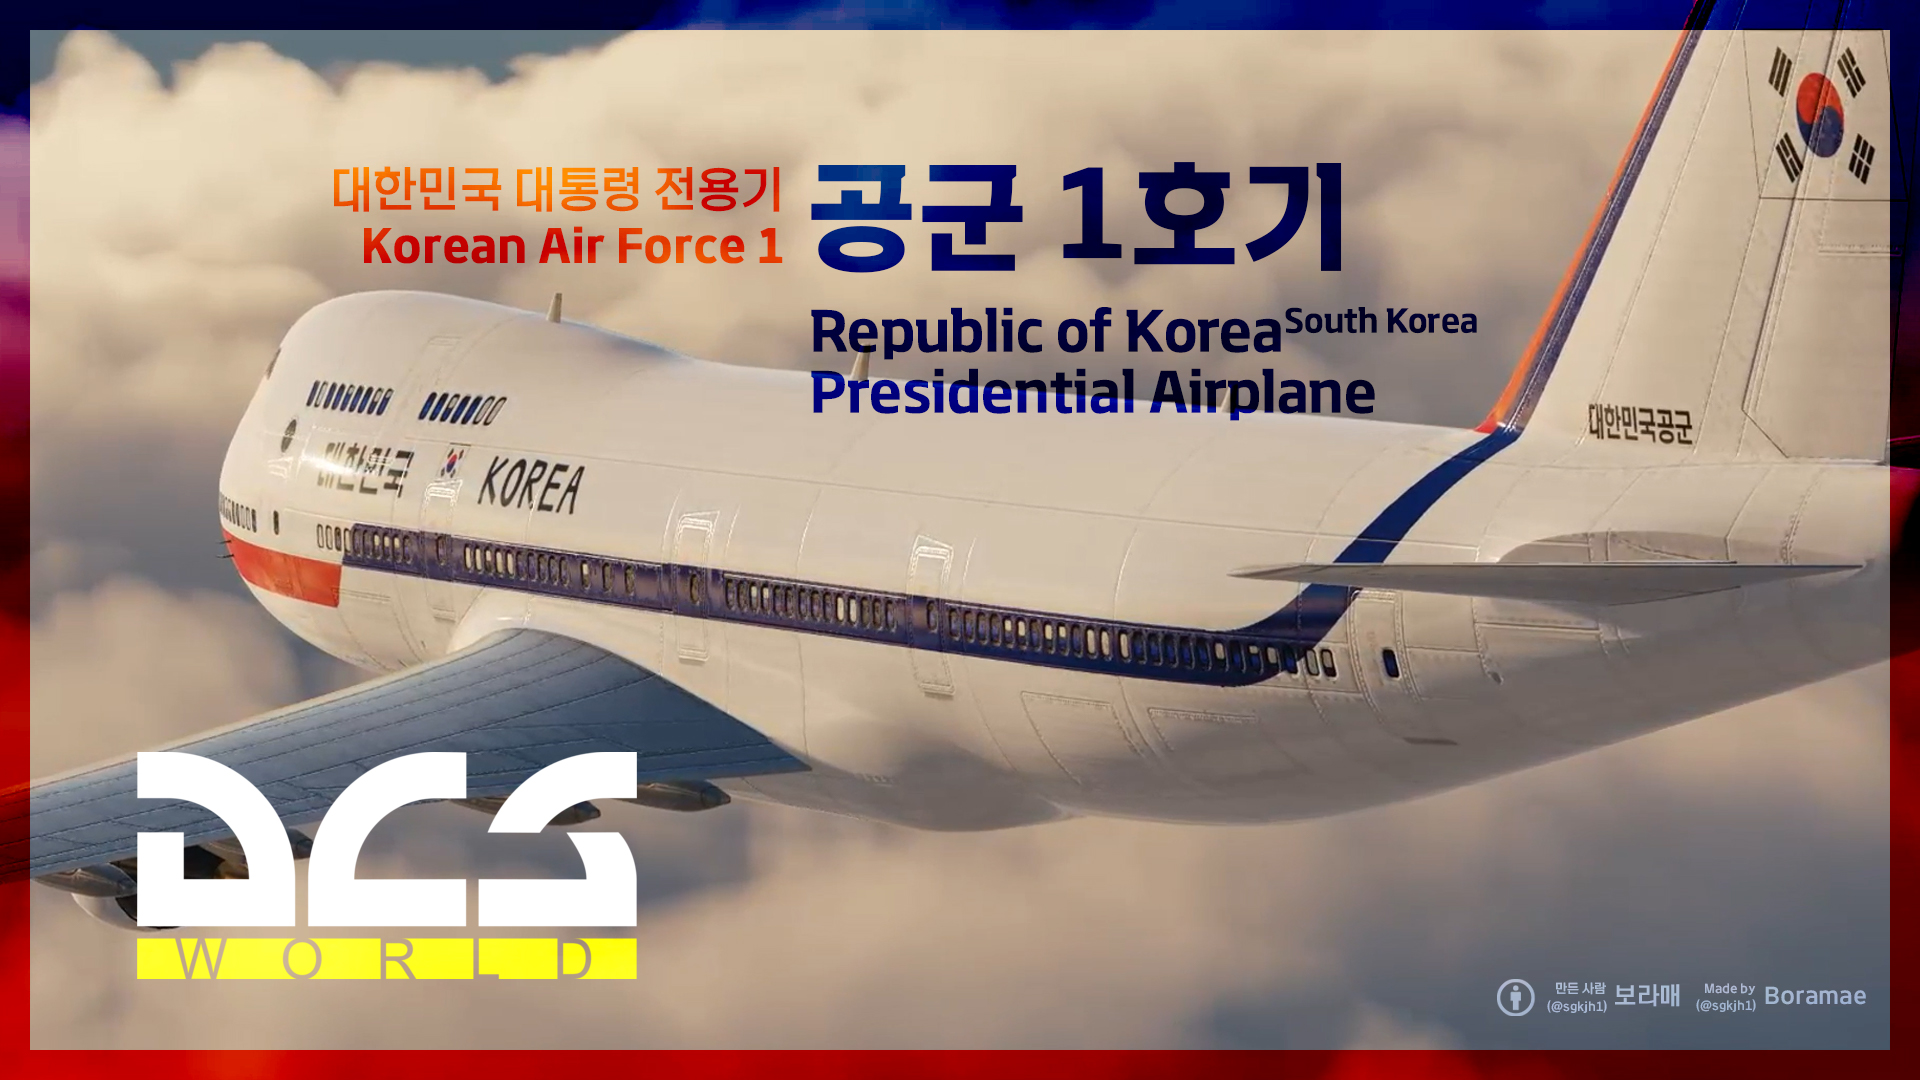 Korean Air Force One(Korean Presidential Airplane) Skin for Boeing 747 / 대한민국 공군 1호기(대한민국 대통령 전용기)